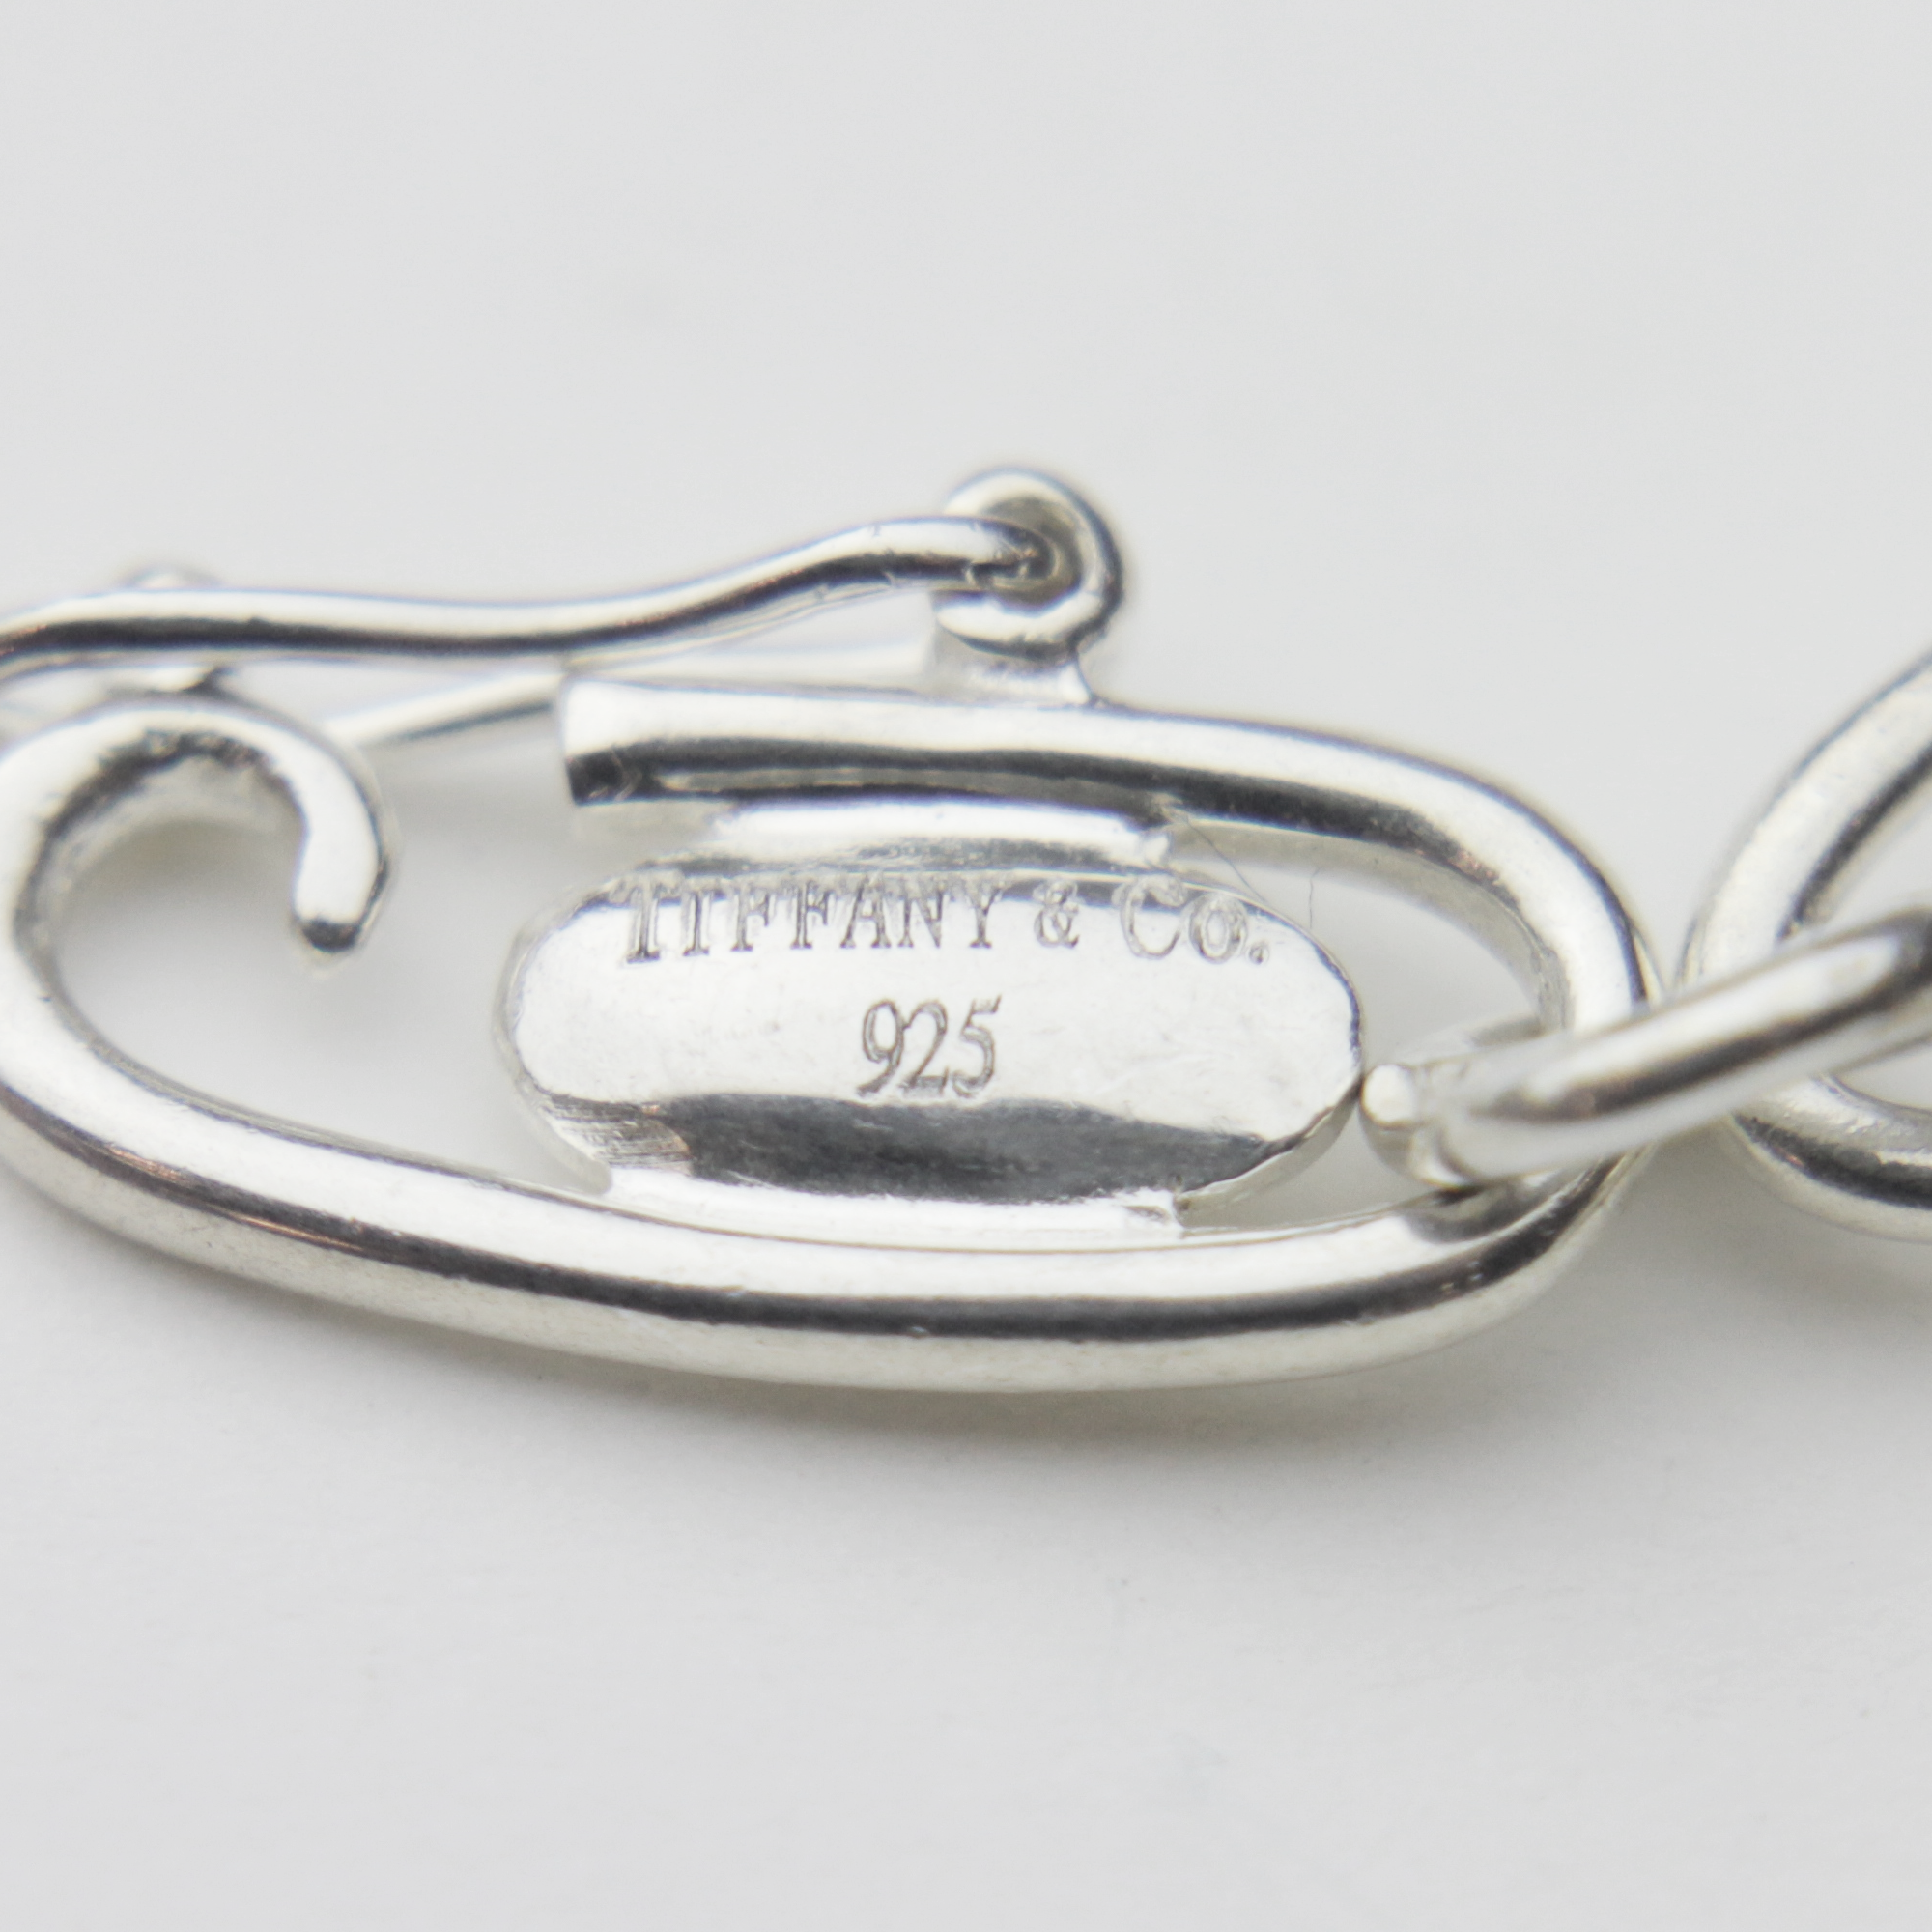 Return to Tiffany™ Tiffany Blue Heart Tag Bead Bracelet in Silver, 4 mm |  Tiffany & Co.